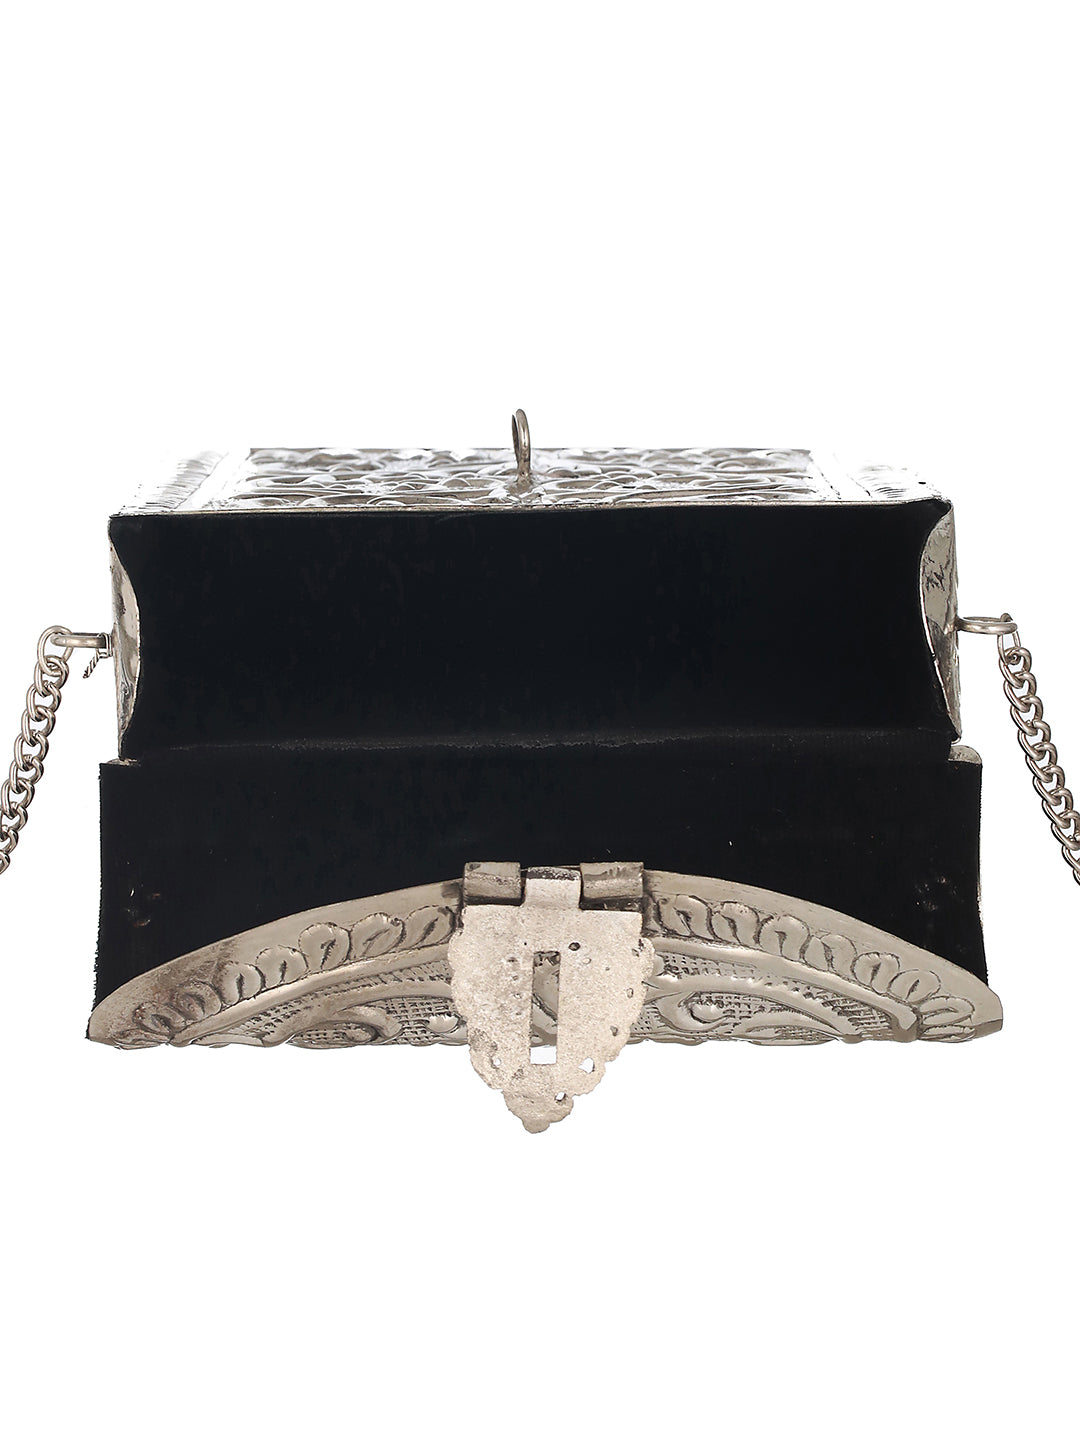 EMPIRICART Silver Metal Beaded Handicraft Beautiful Bling Box Clutch Bag  Purse For Bridal, Casual, Party, Wedding : Amazon.in: Fashion